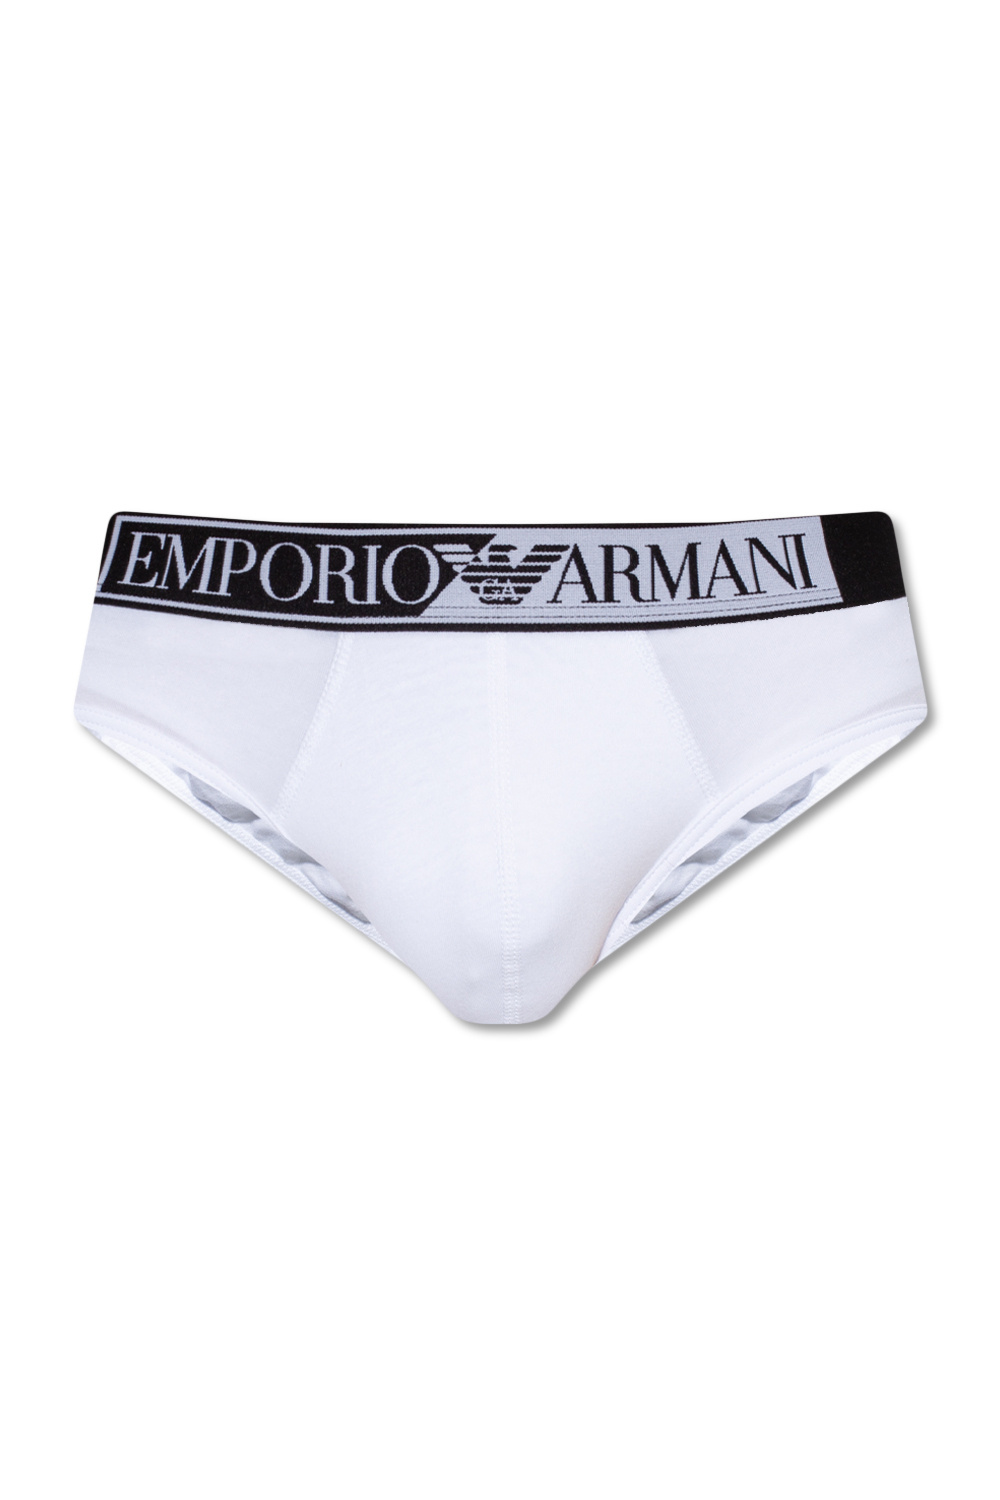 Giorgio Armani Track & Running Shorts - IetpShops Japan - Briefs with logo Emporio  Armani